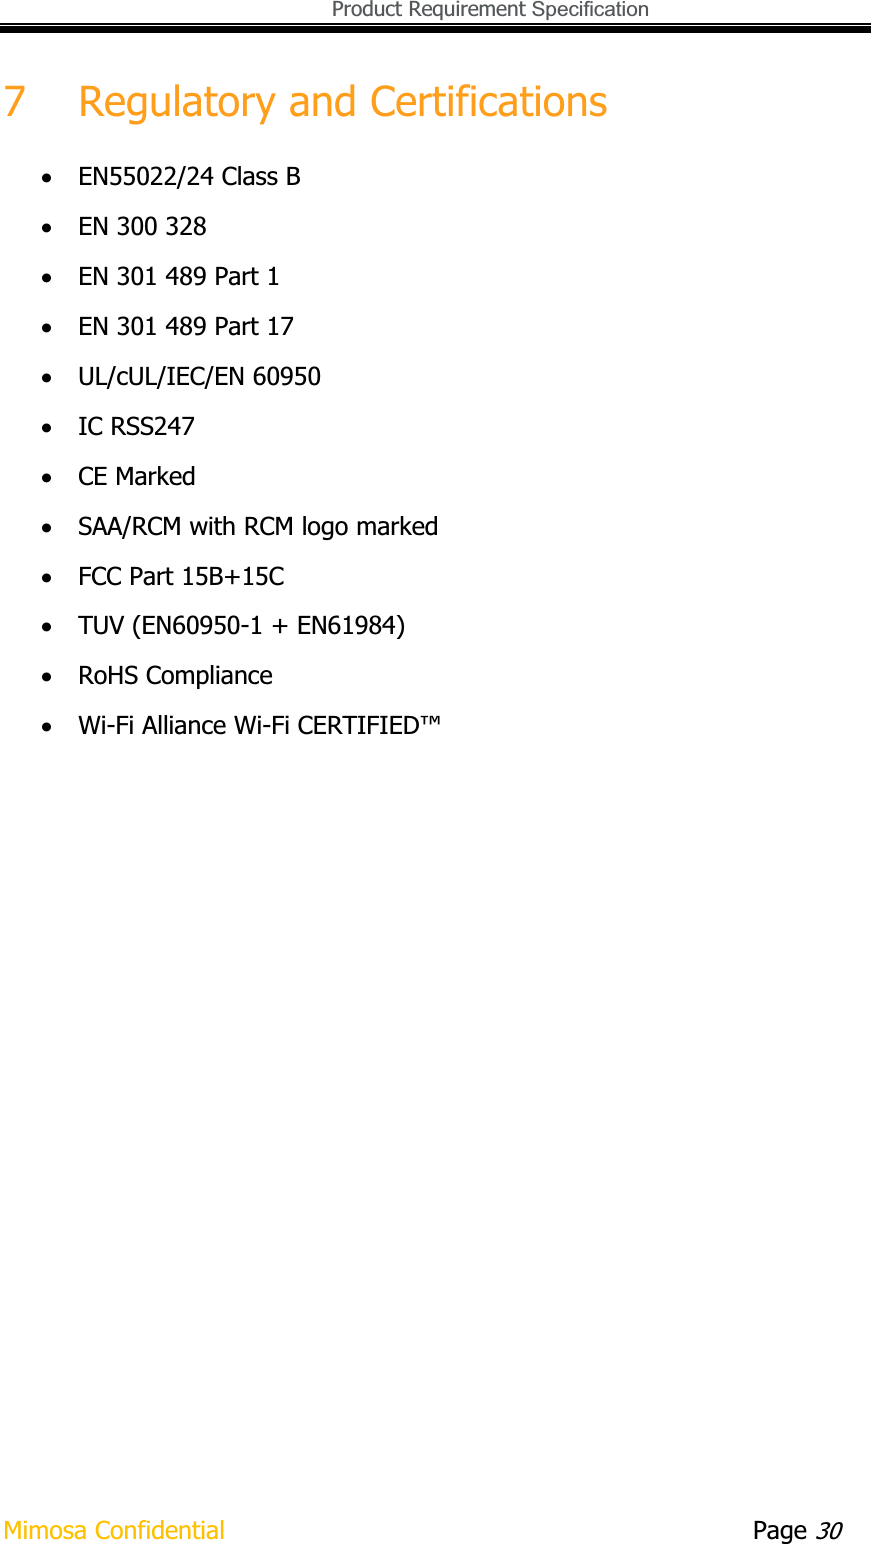   Product Requirement Specification Mimosa Confidential        Page 307 Regulatory and Certifications xEN55022/24 Class B xEN 300 328 xEN 301 489 Part 1 xEN 301 489 Part 17 xUL/cUL/IEC/EN 60950 xIC RSS247 xCE Marked xSAA/RCM with RCM logo marked xFCC Part 15B+15C xTUV (EN60950-1 + EN61984) xRoHS Compliance xWi-Fi Alliance Wi-Fi CERTIFIED™ 